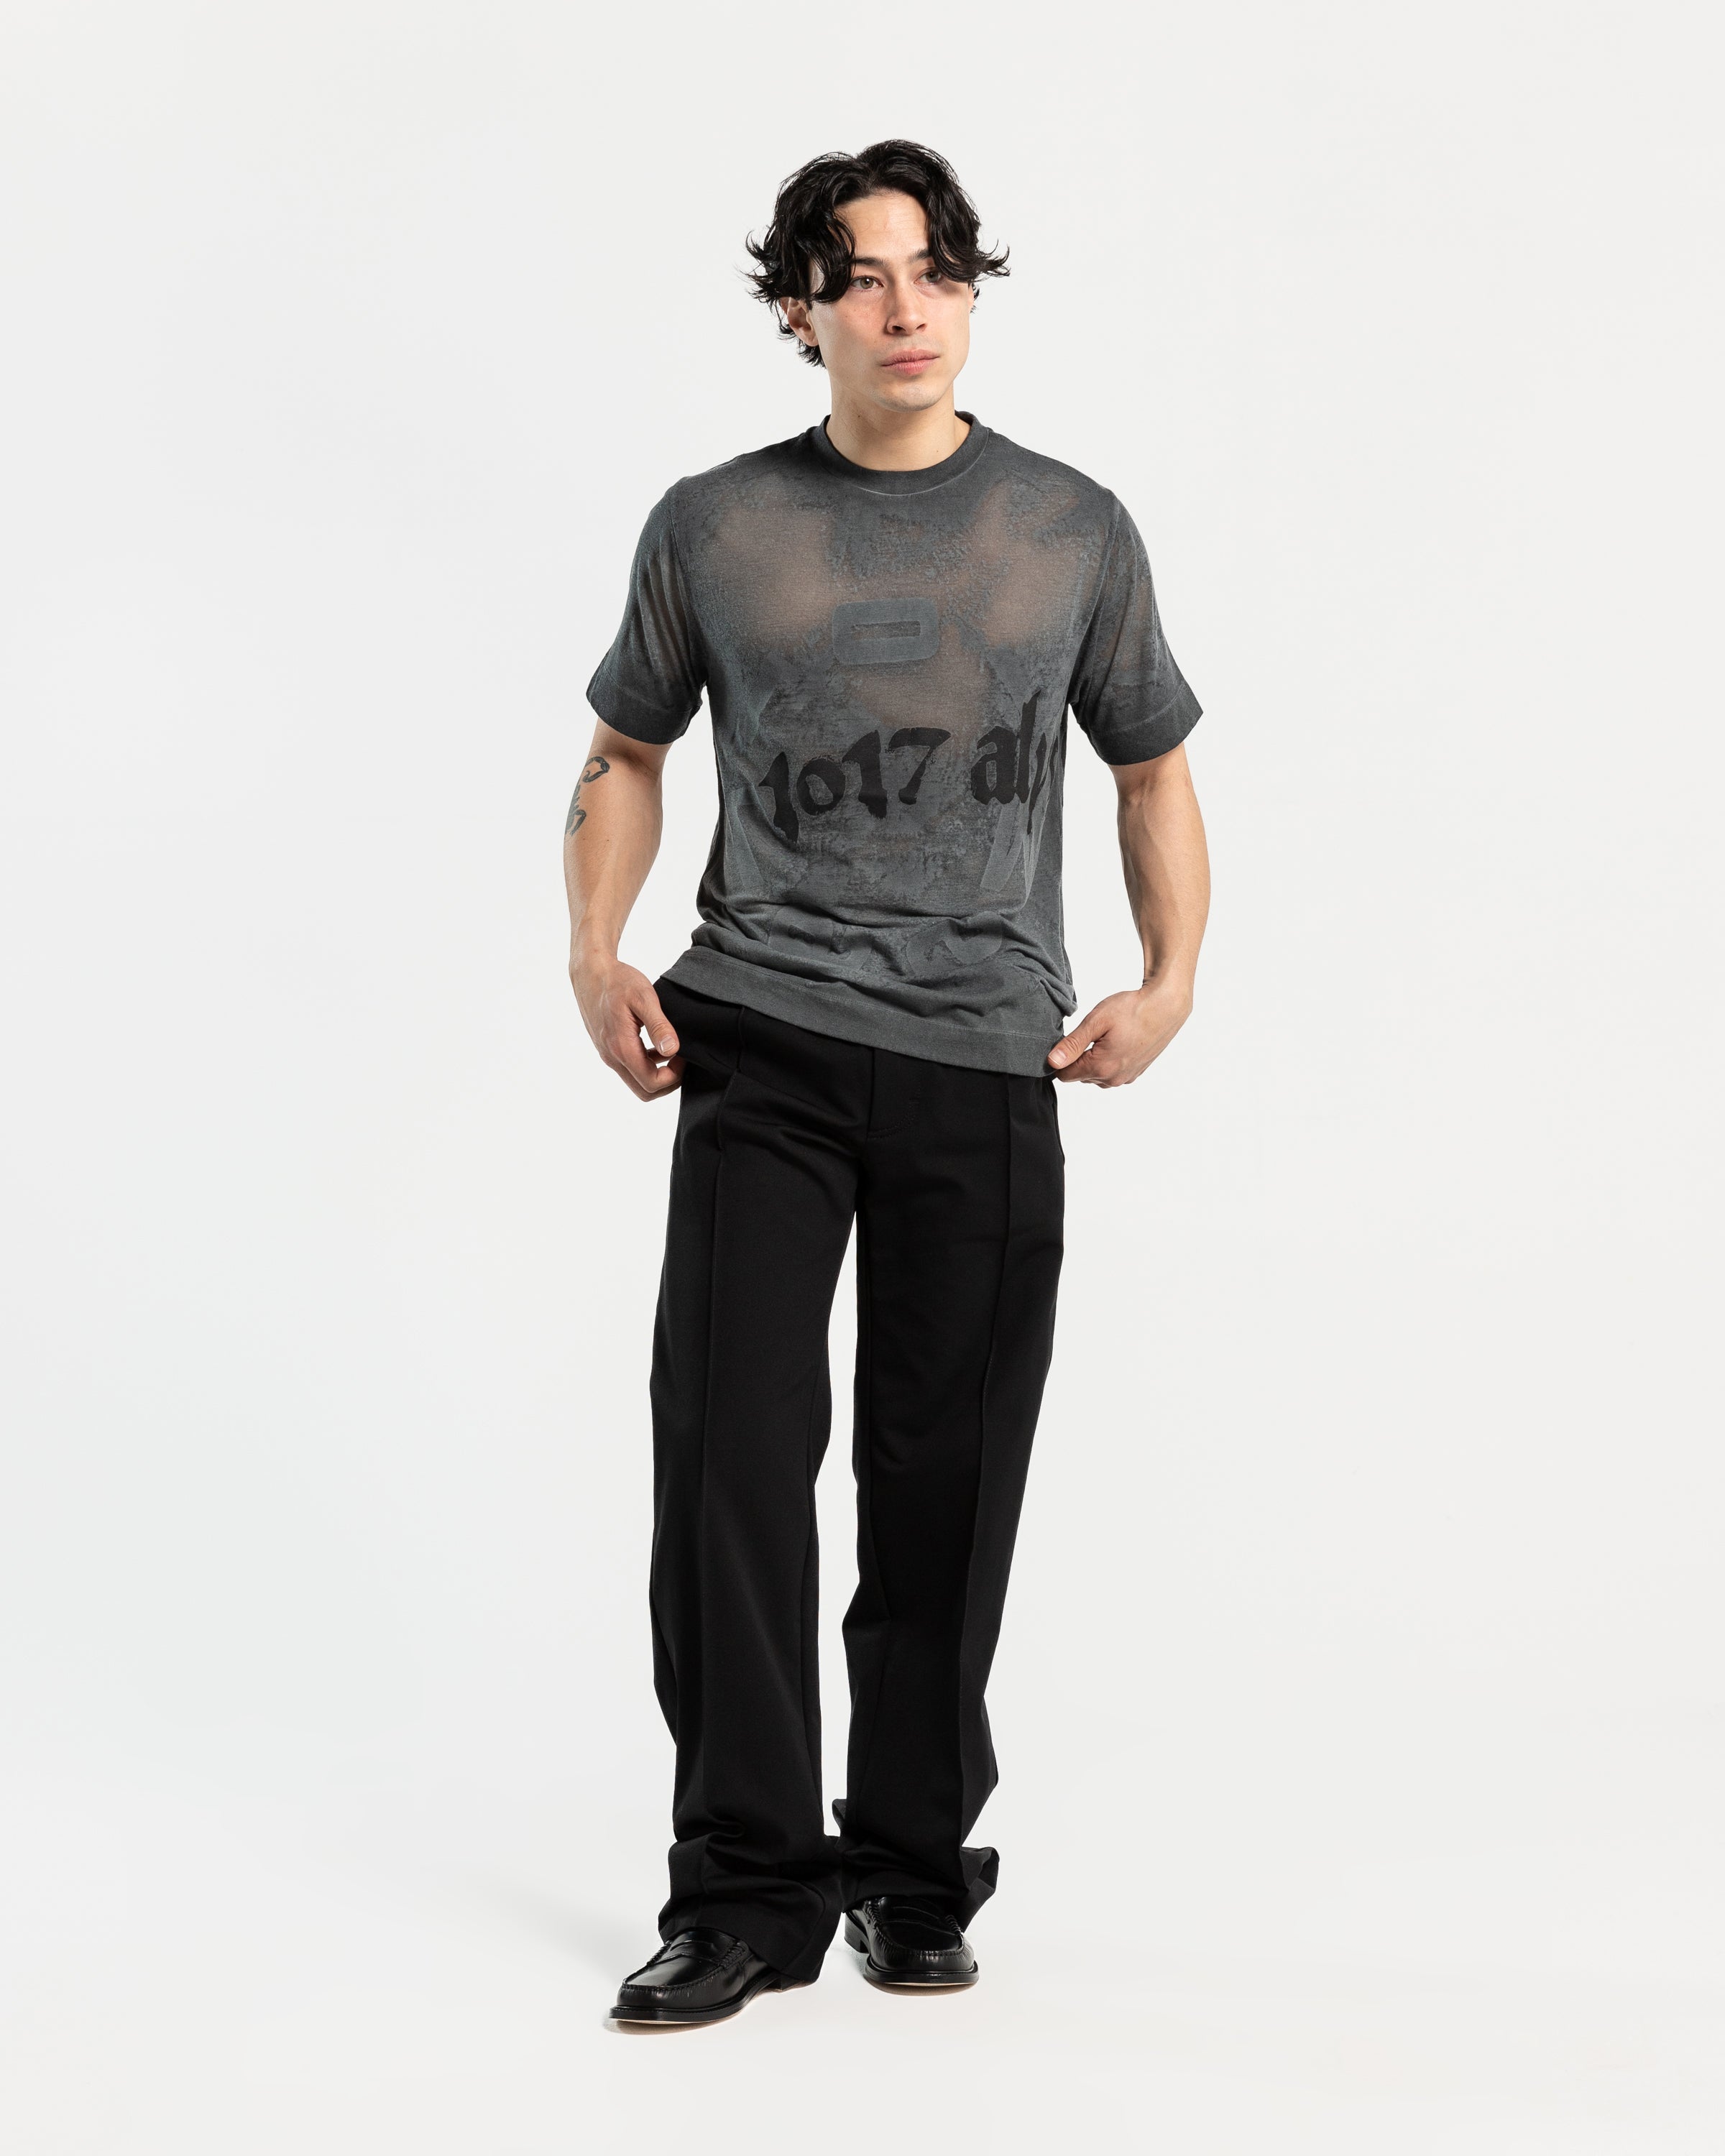 Translucent Graphic T-Shirt in Black